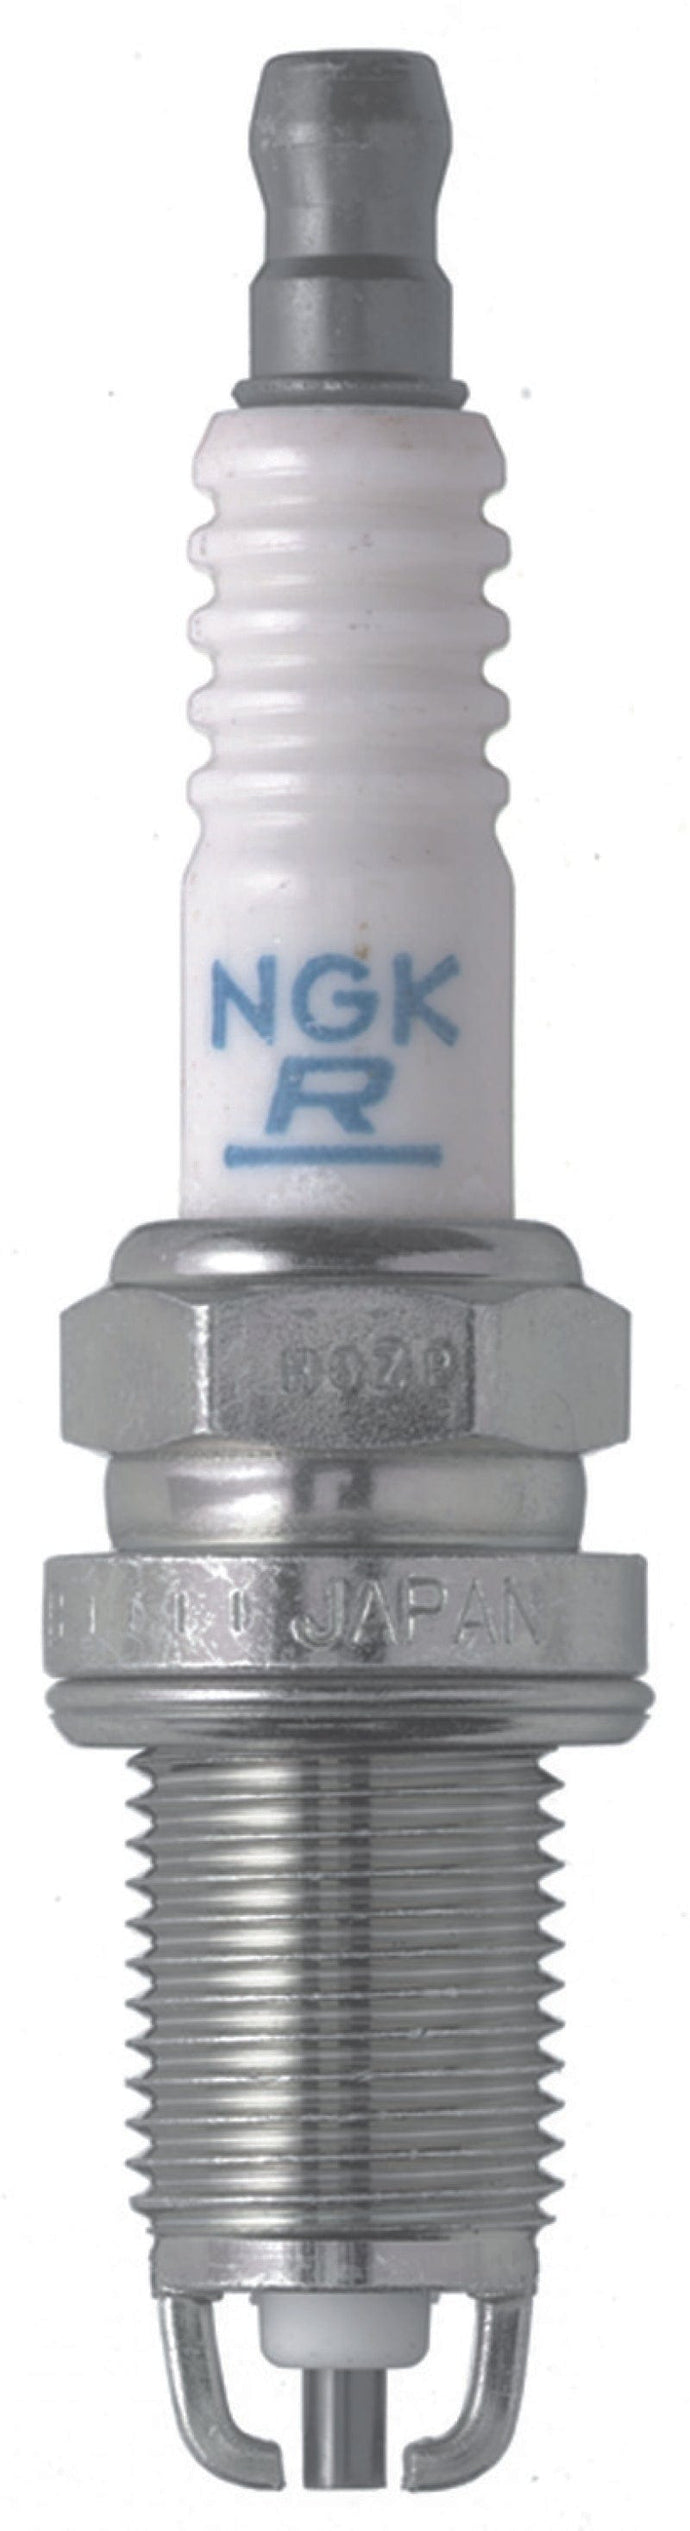 NGK NGK3967